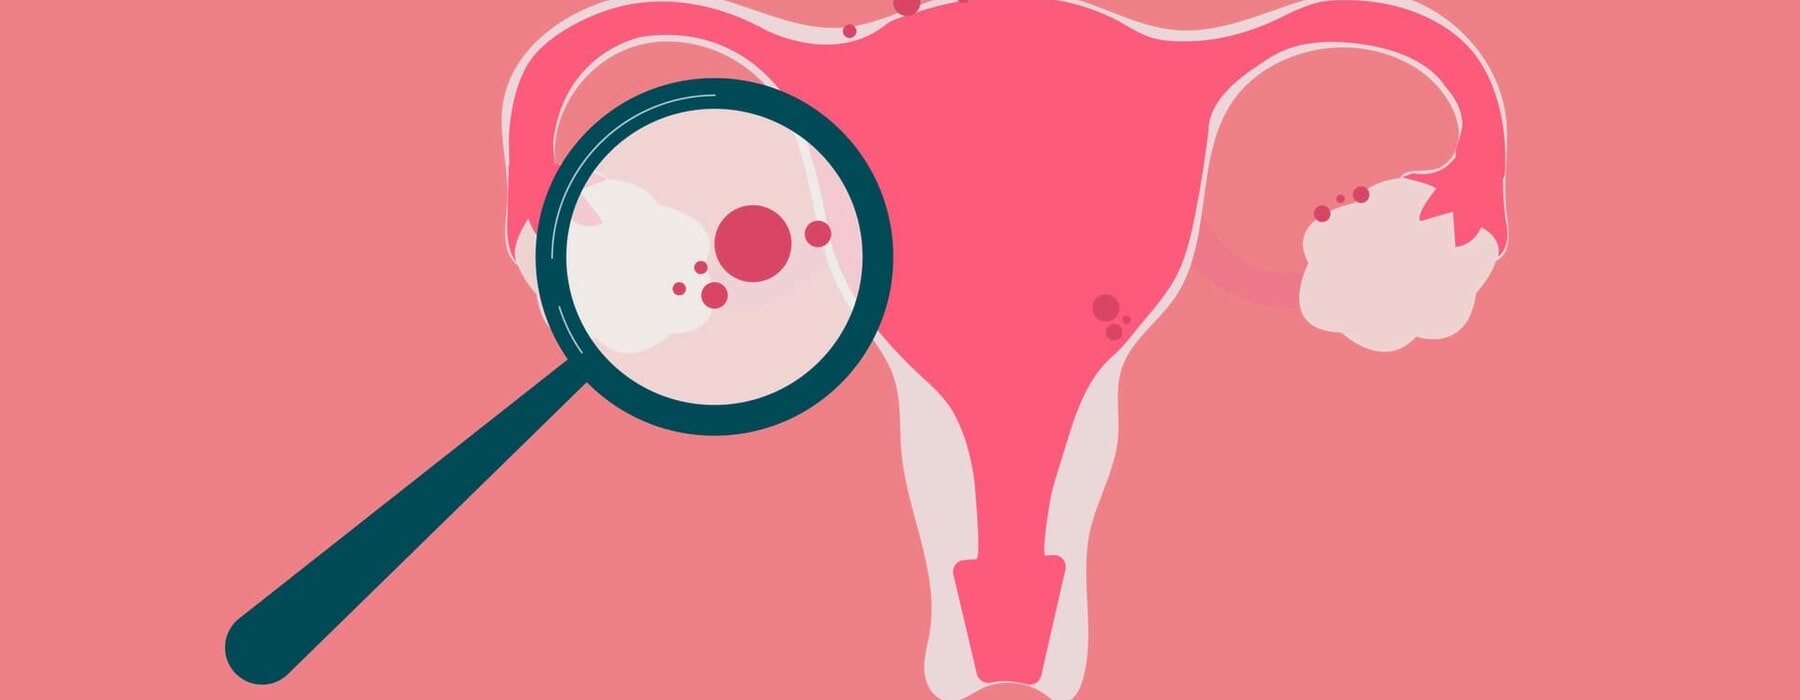 endometriosis-concept-illustration